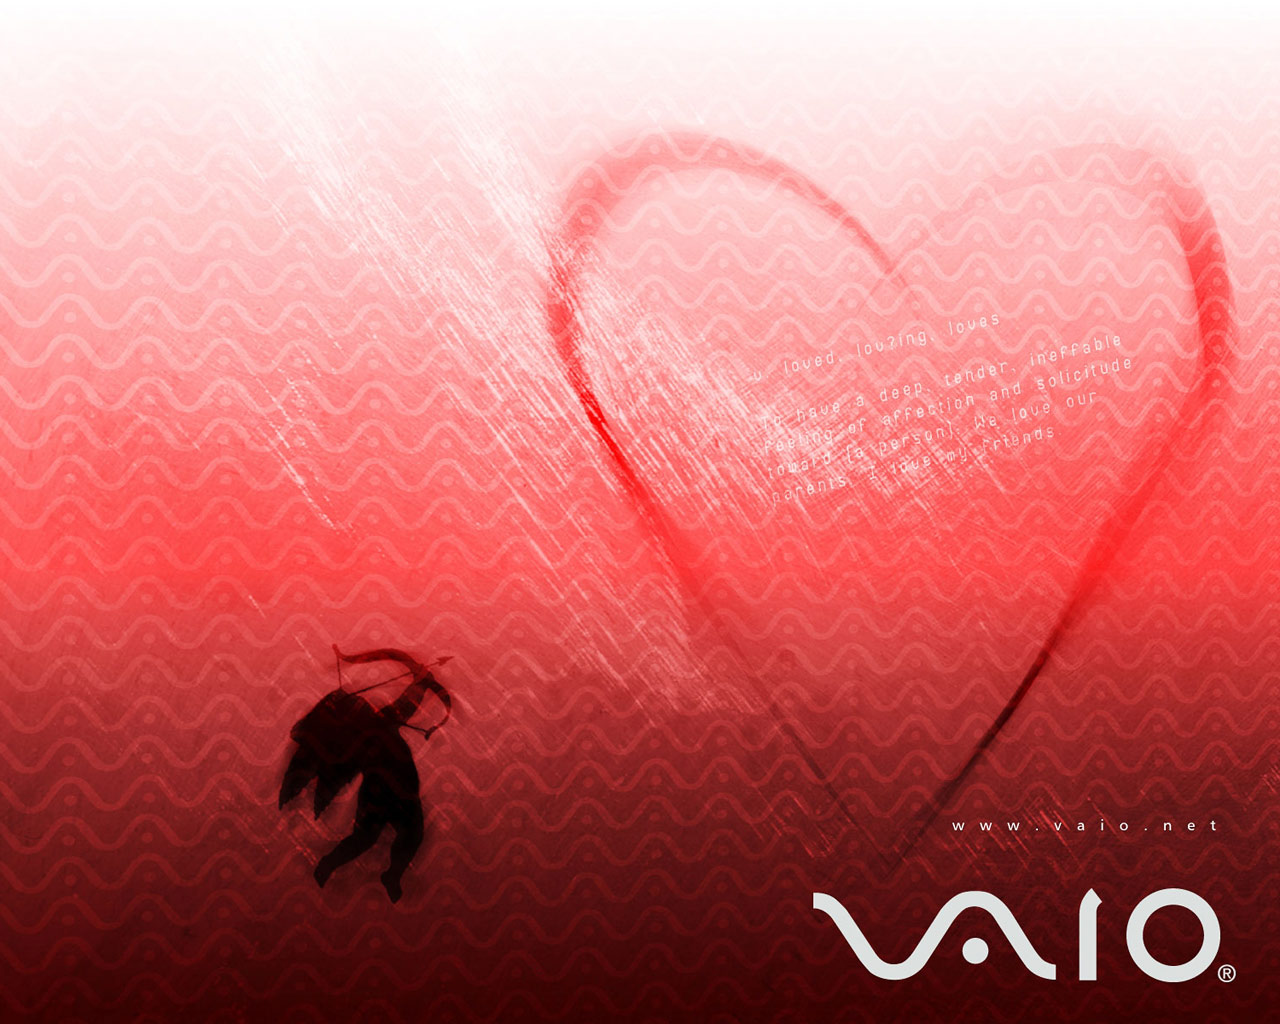 http://3.bp.blogspot.com/-RlFzLWSl0Xw/T1cEMmoAoyI/AAAAAAAARy8/Vea_yiOcazM/s1600/Valentine_Day%252C_Sony_VAIO.jpg